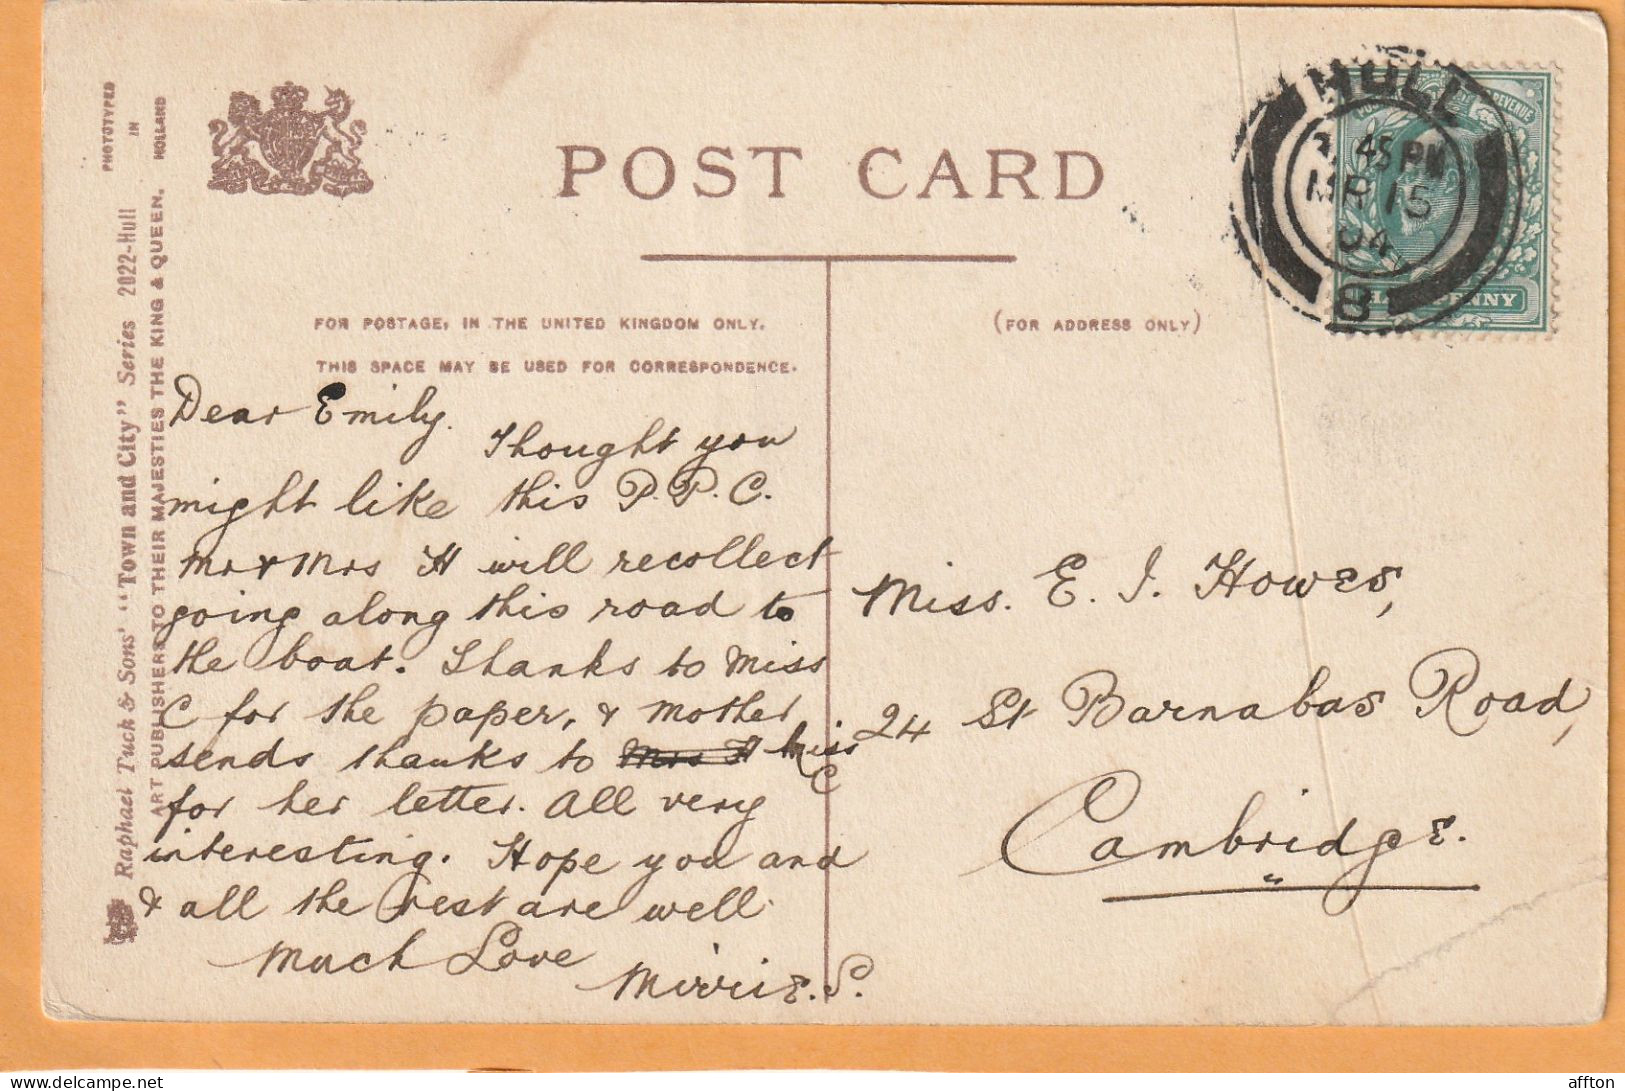 Hull UK 1904 Postcard - Hull